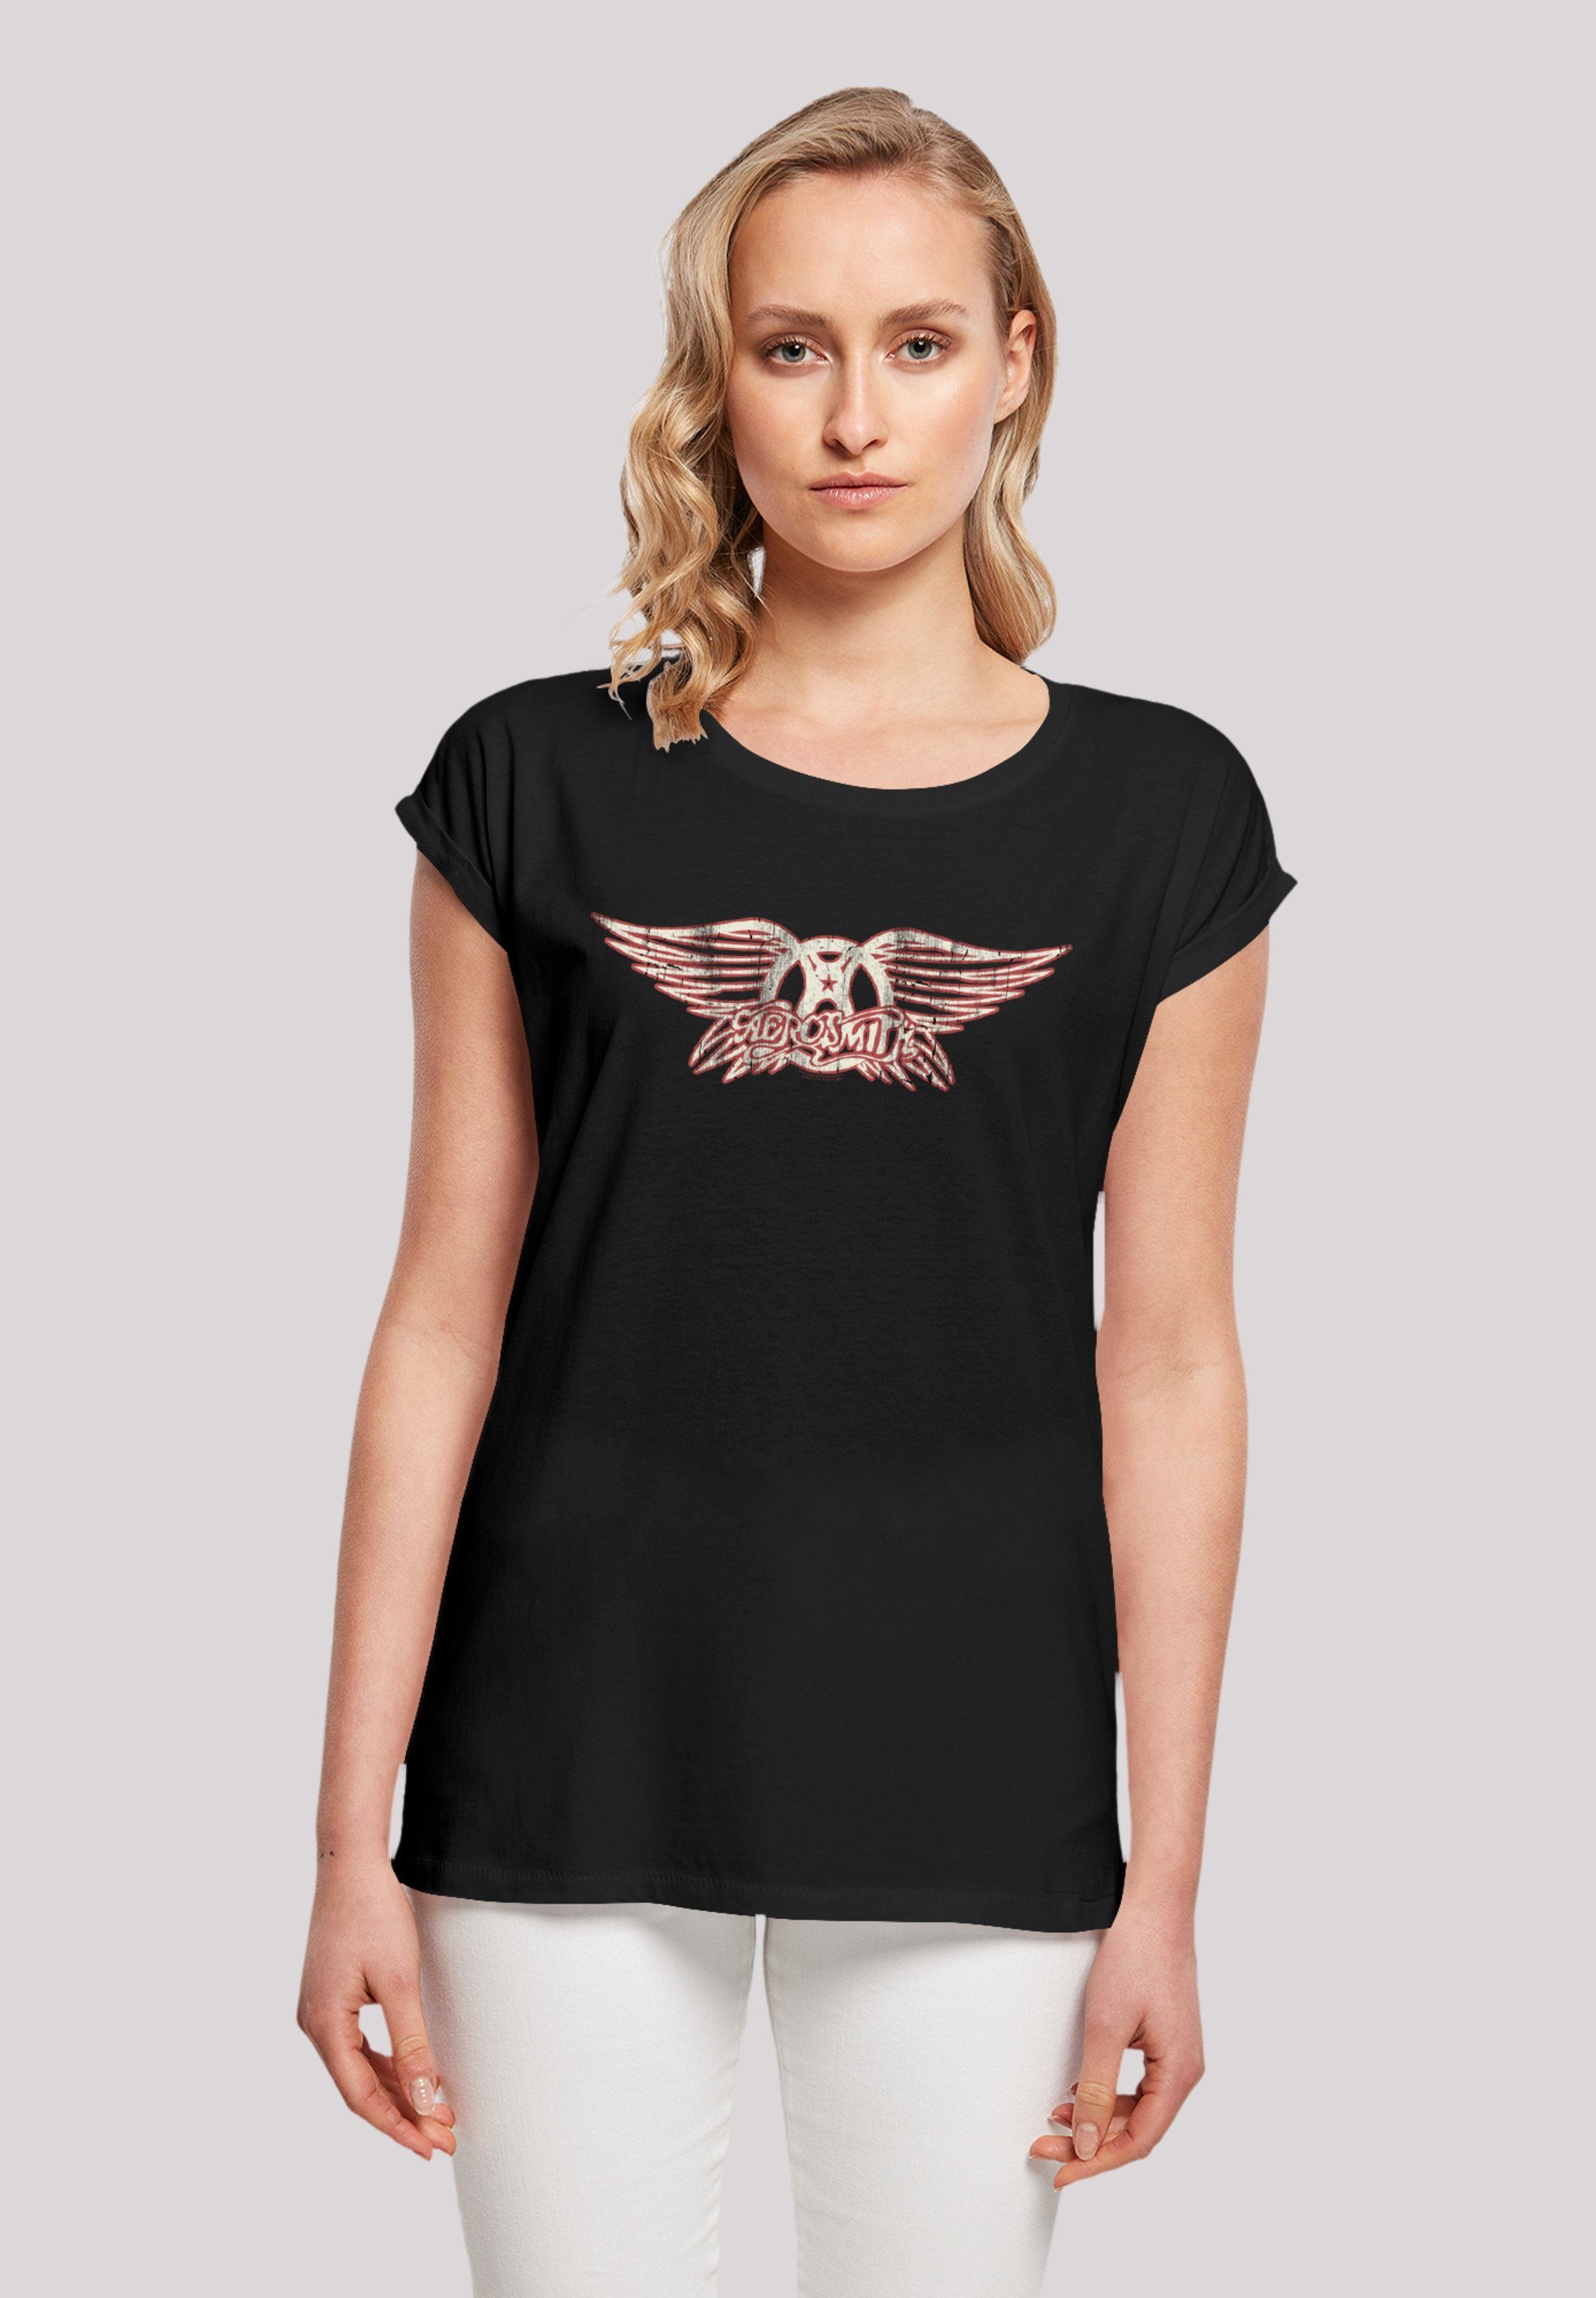 Band T-Shirt Qualität, Rock Premium F4NT4STIC Band Aerosmith Rock-Musik, Logo